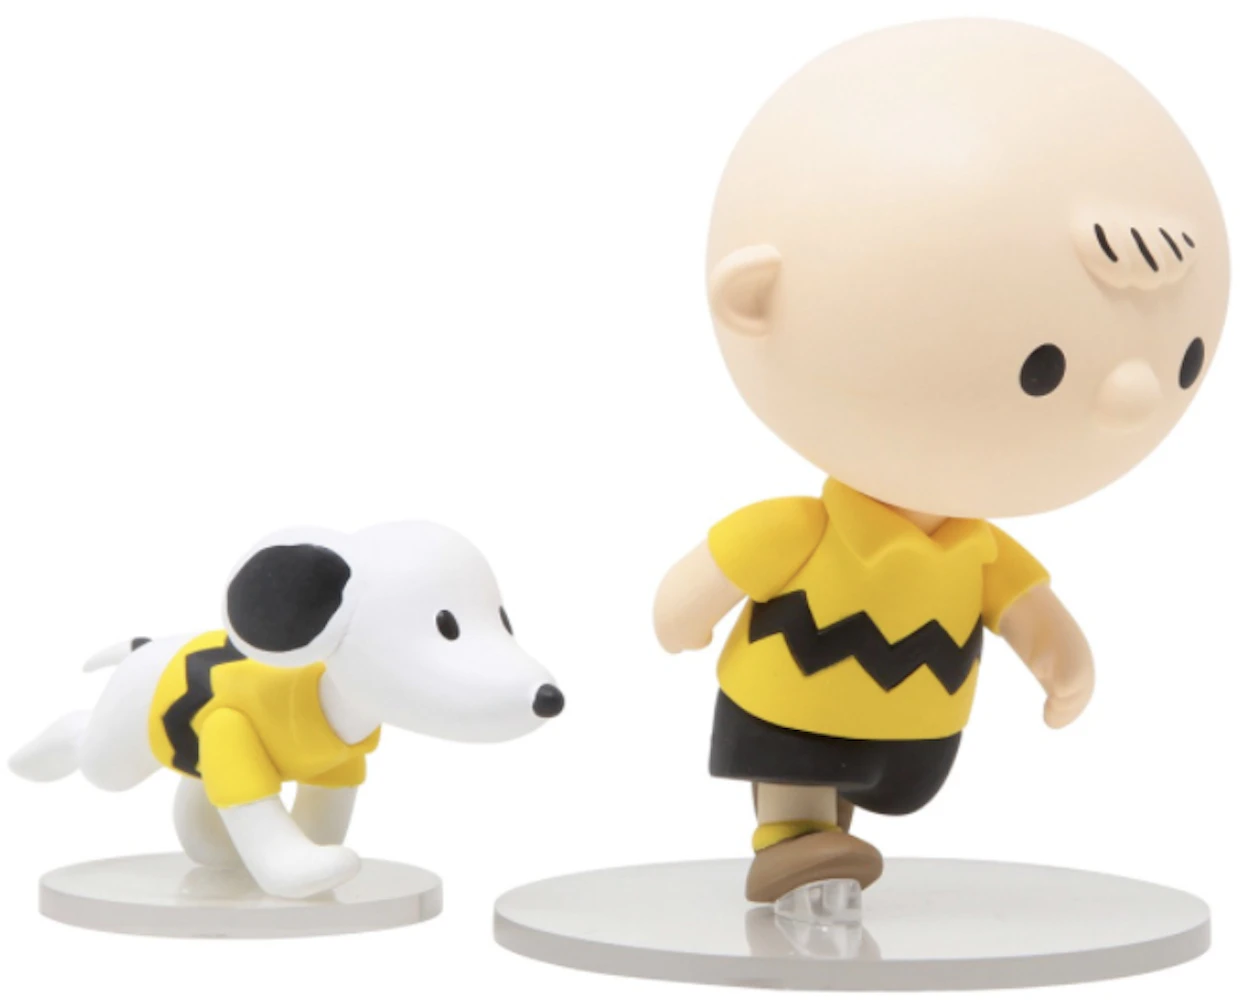 Medicom UDF Peanuts Series 11 Charlie Brown and Snoopy Figure - GB